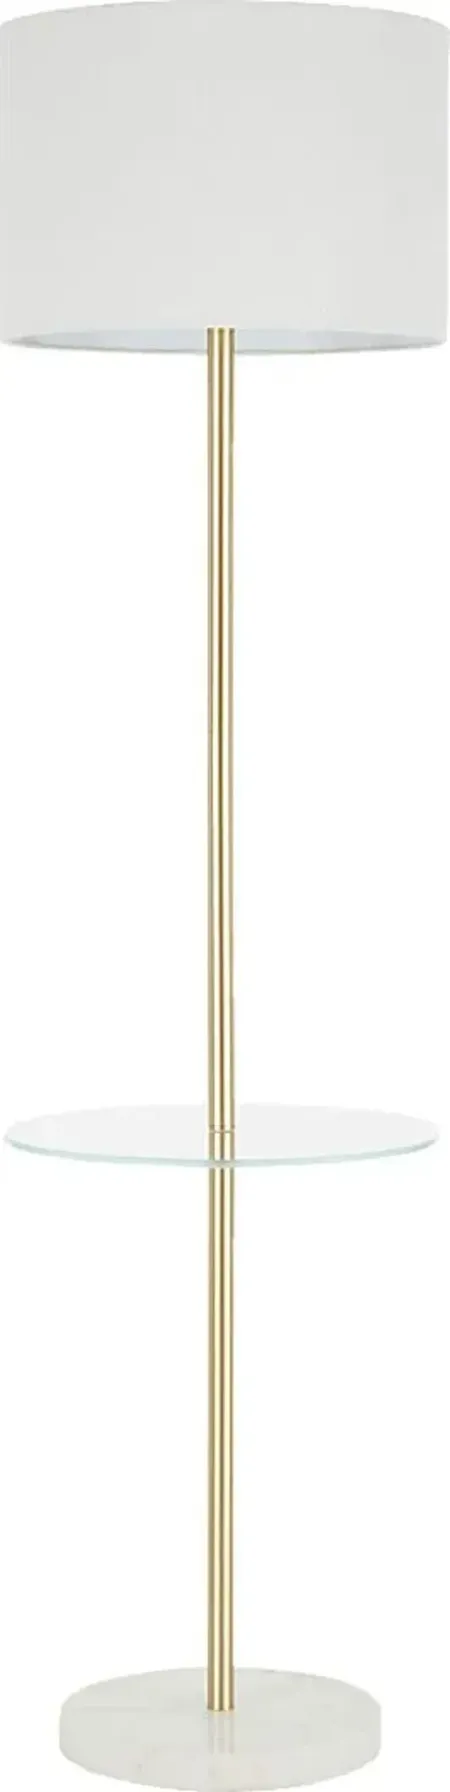 Charlmark Gold Floor Lamp